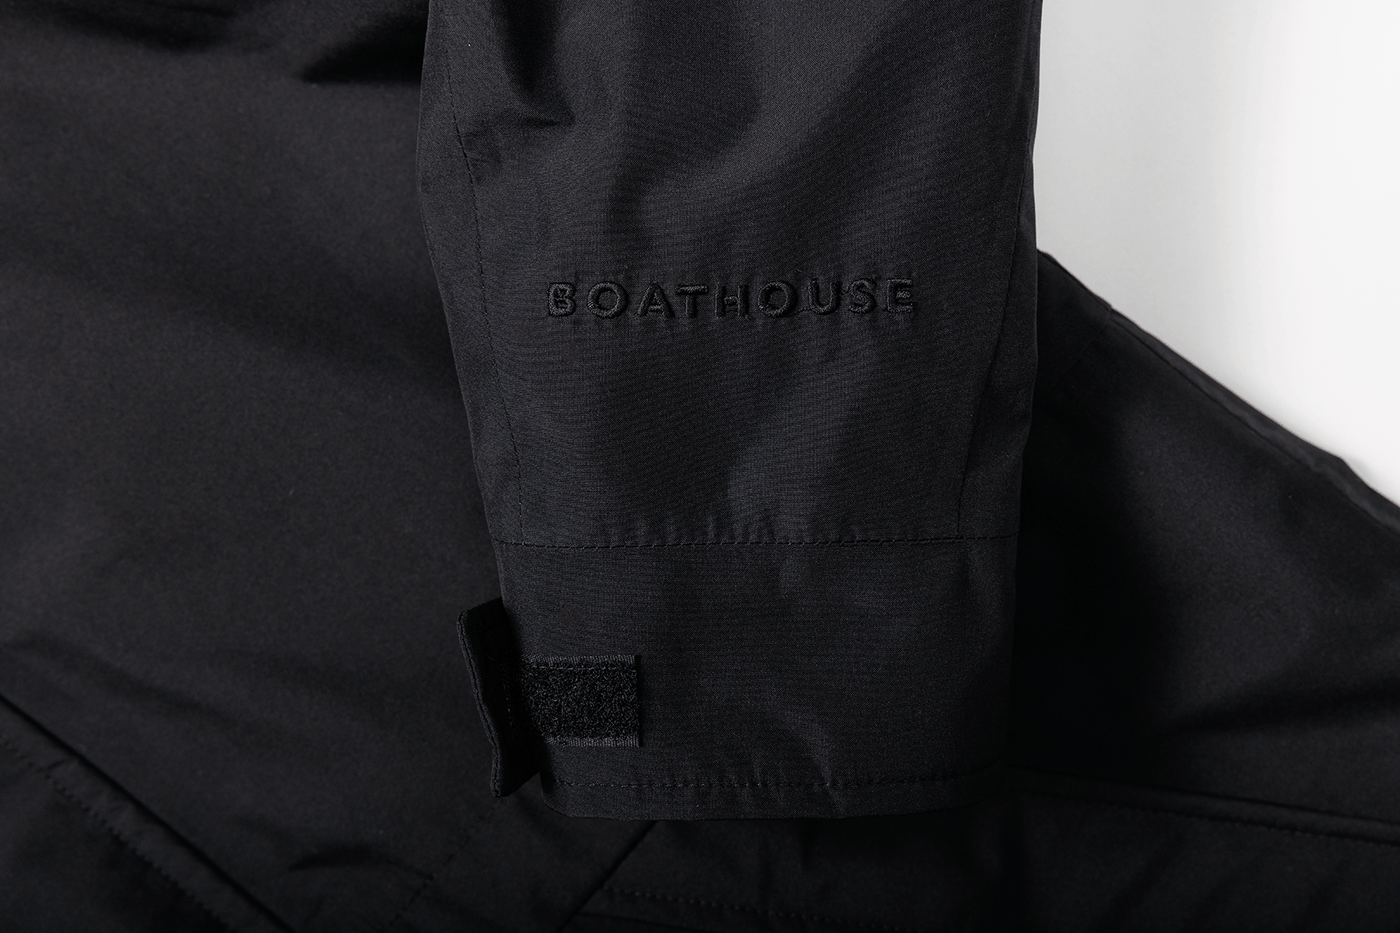 Black Boathouse Blitz GORE-TEX® Branded Waterproof Jacket Sleeve with Boathouse logo